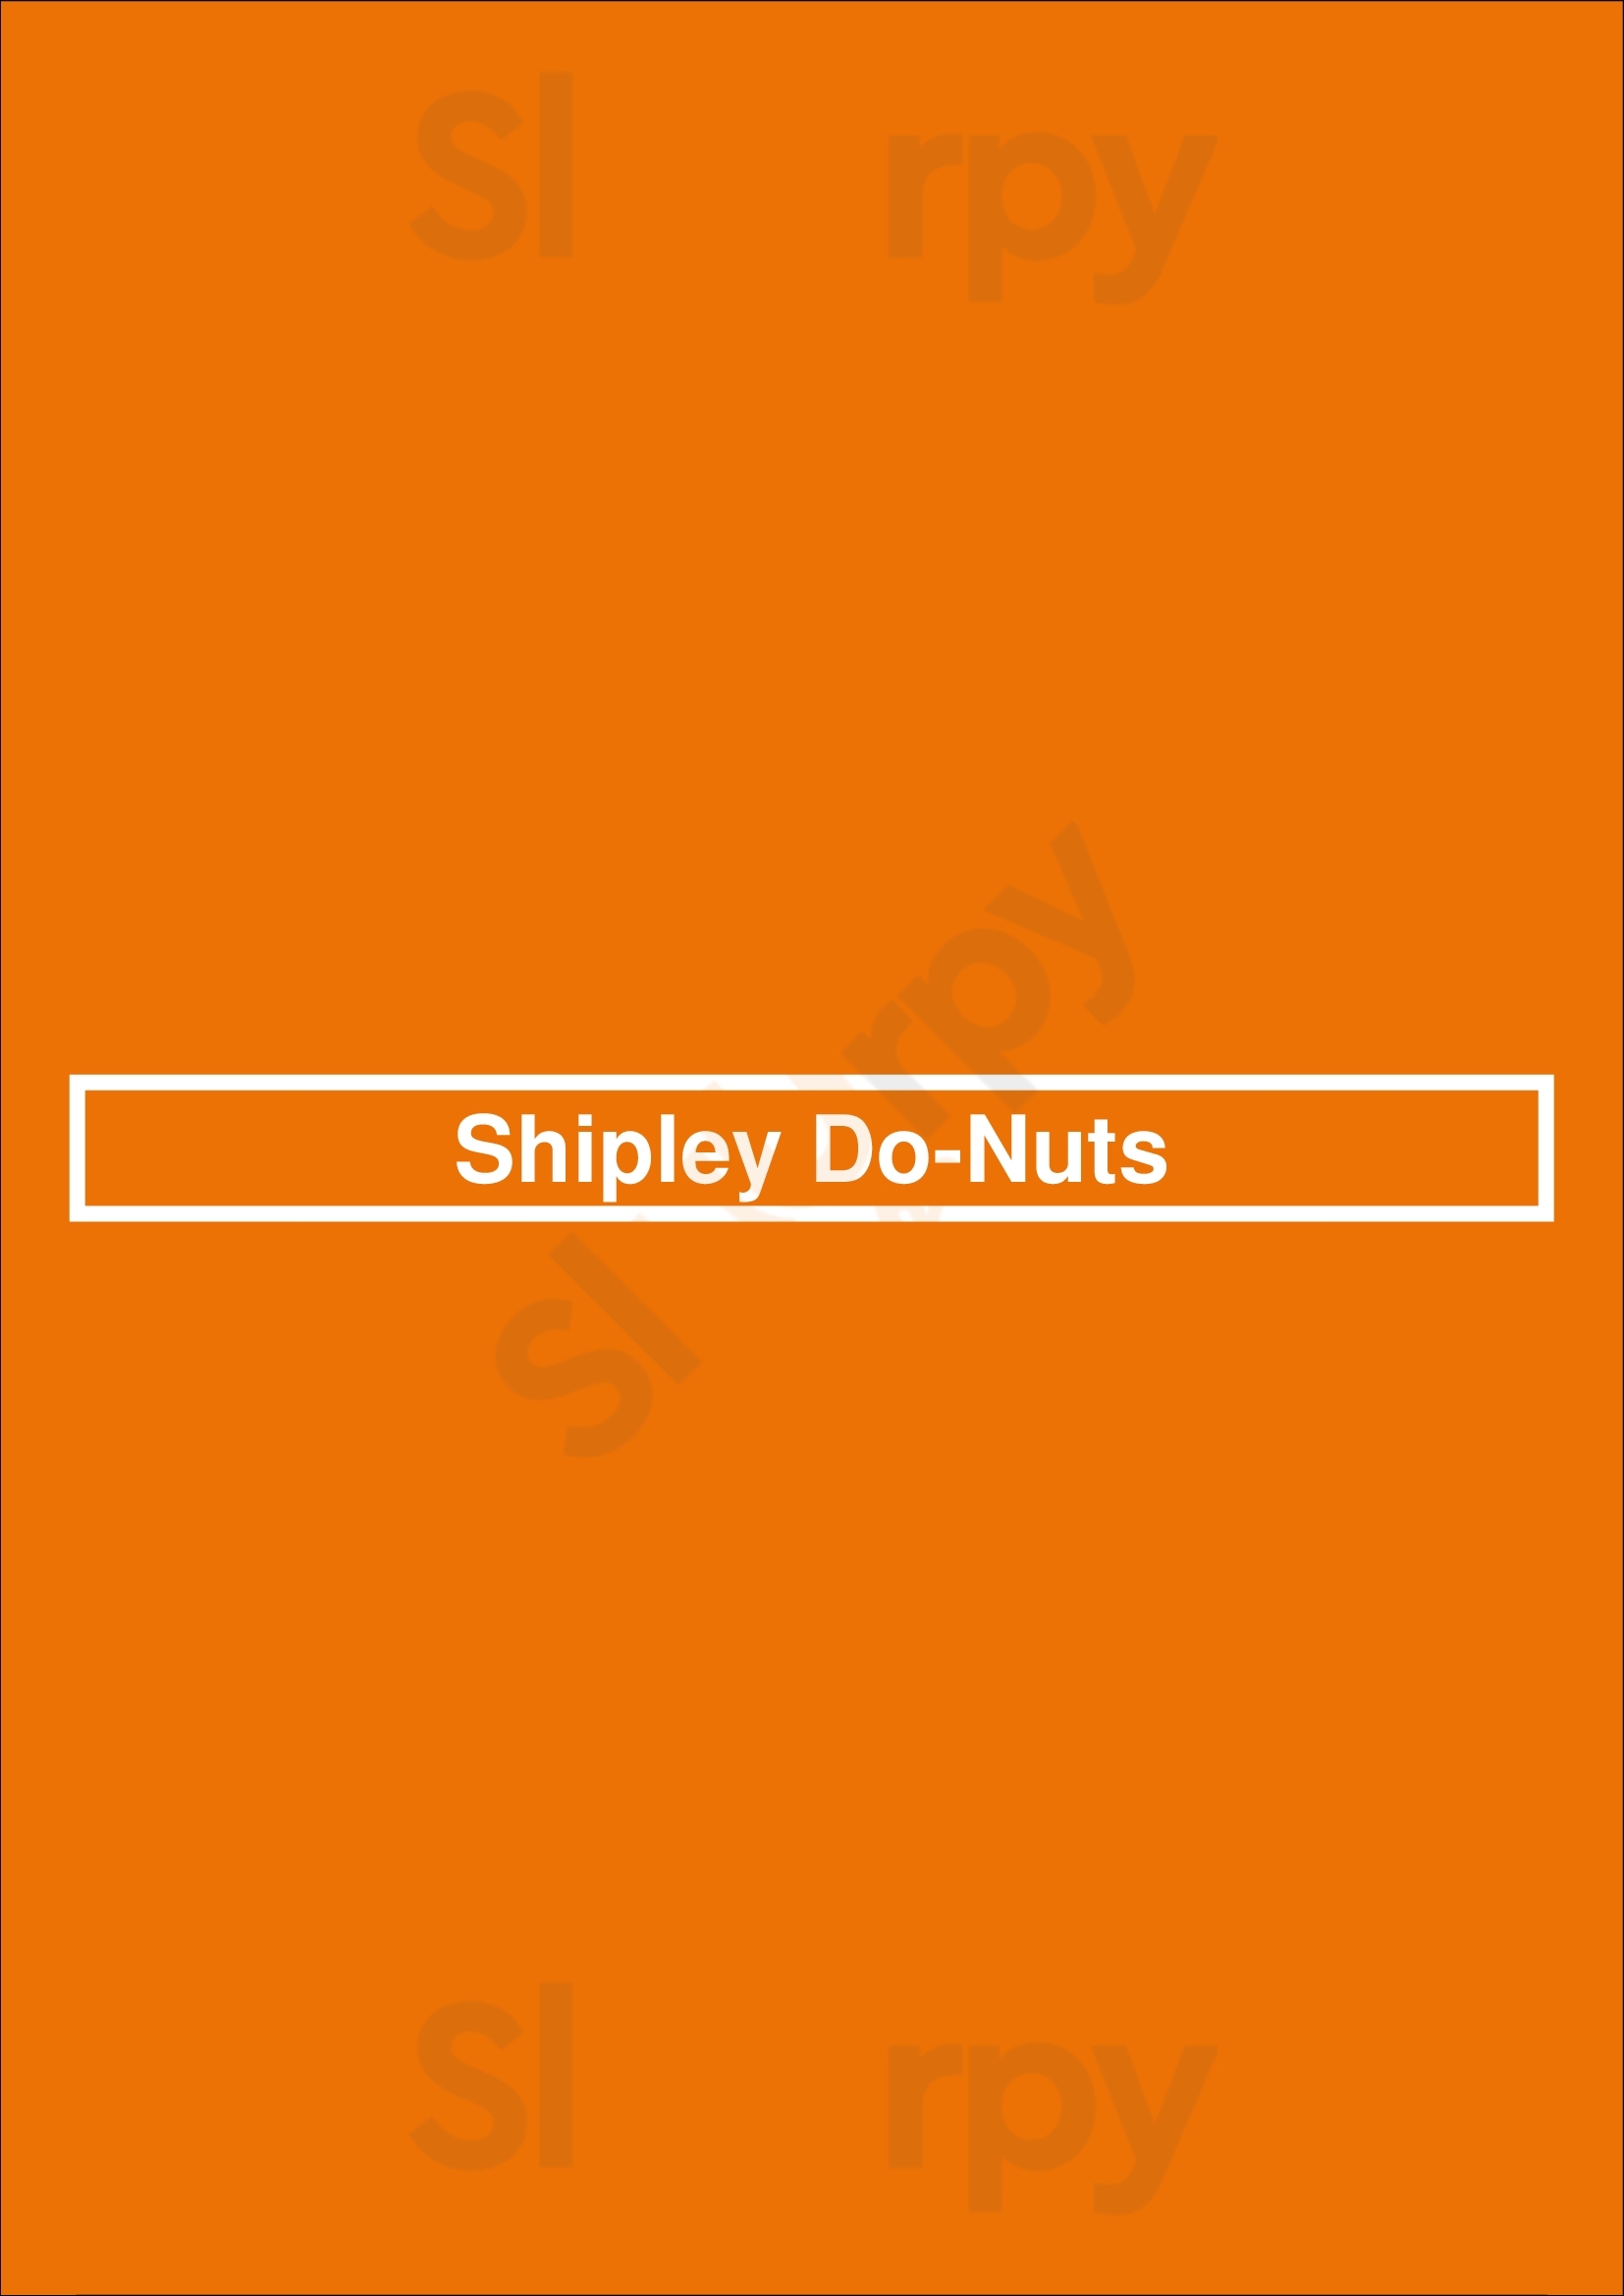 Shipley Do-nuts Houston Menu - 1